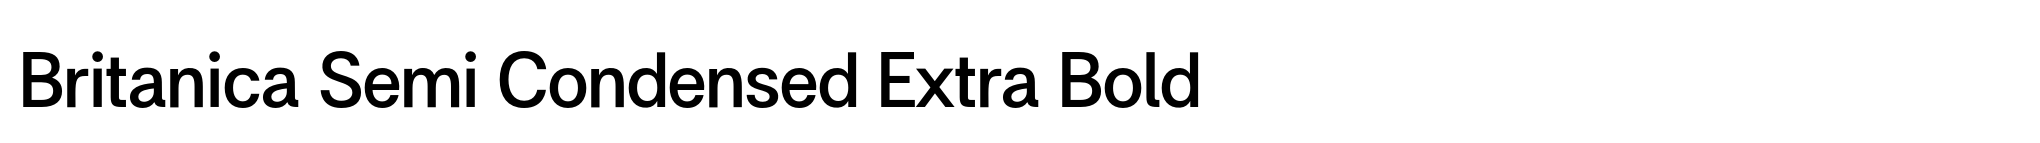 Britanica Semi Condensed Extra Bold image